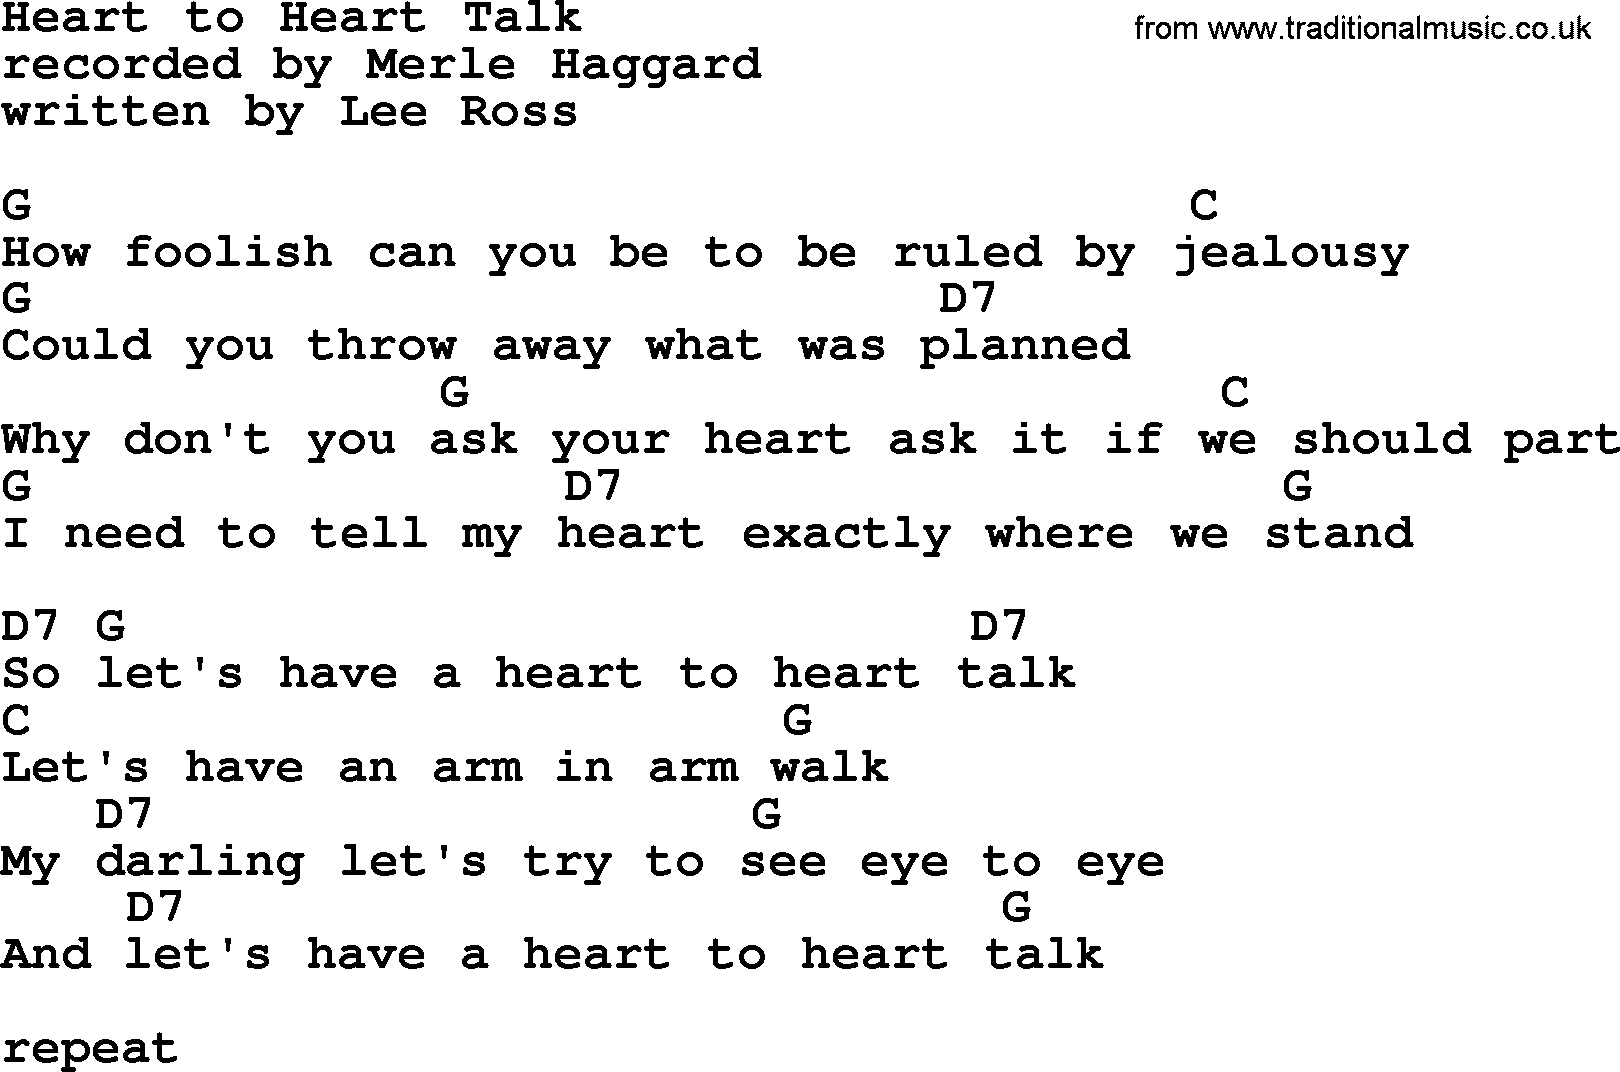 Heart to Heart Talk by Merle Haggard - lyrics and chords